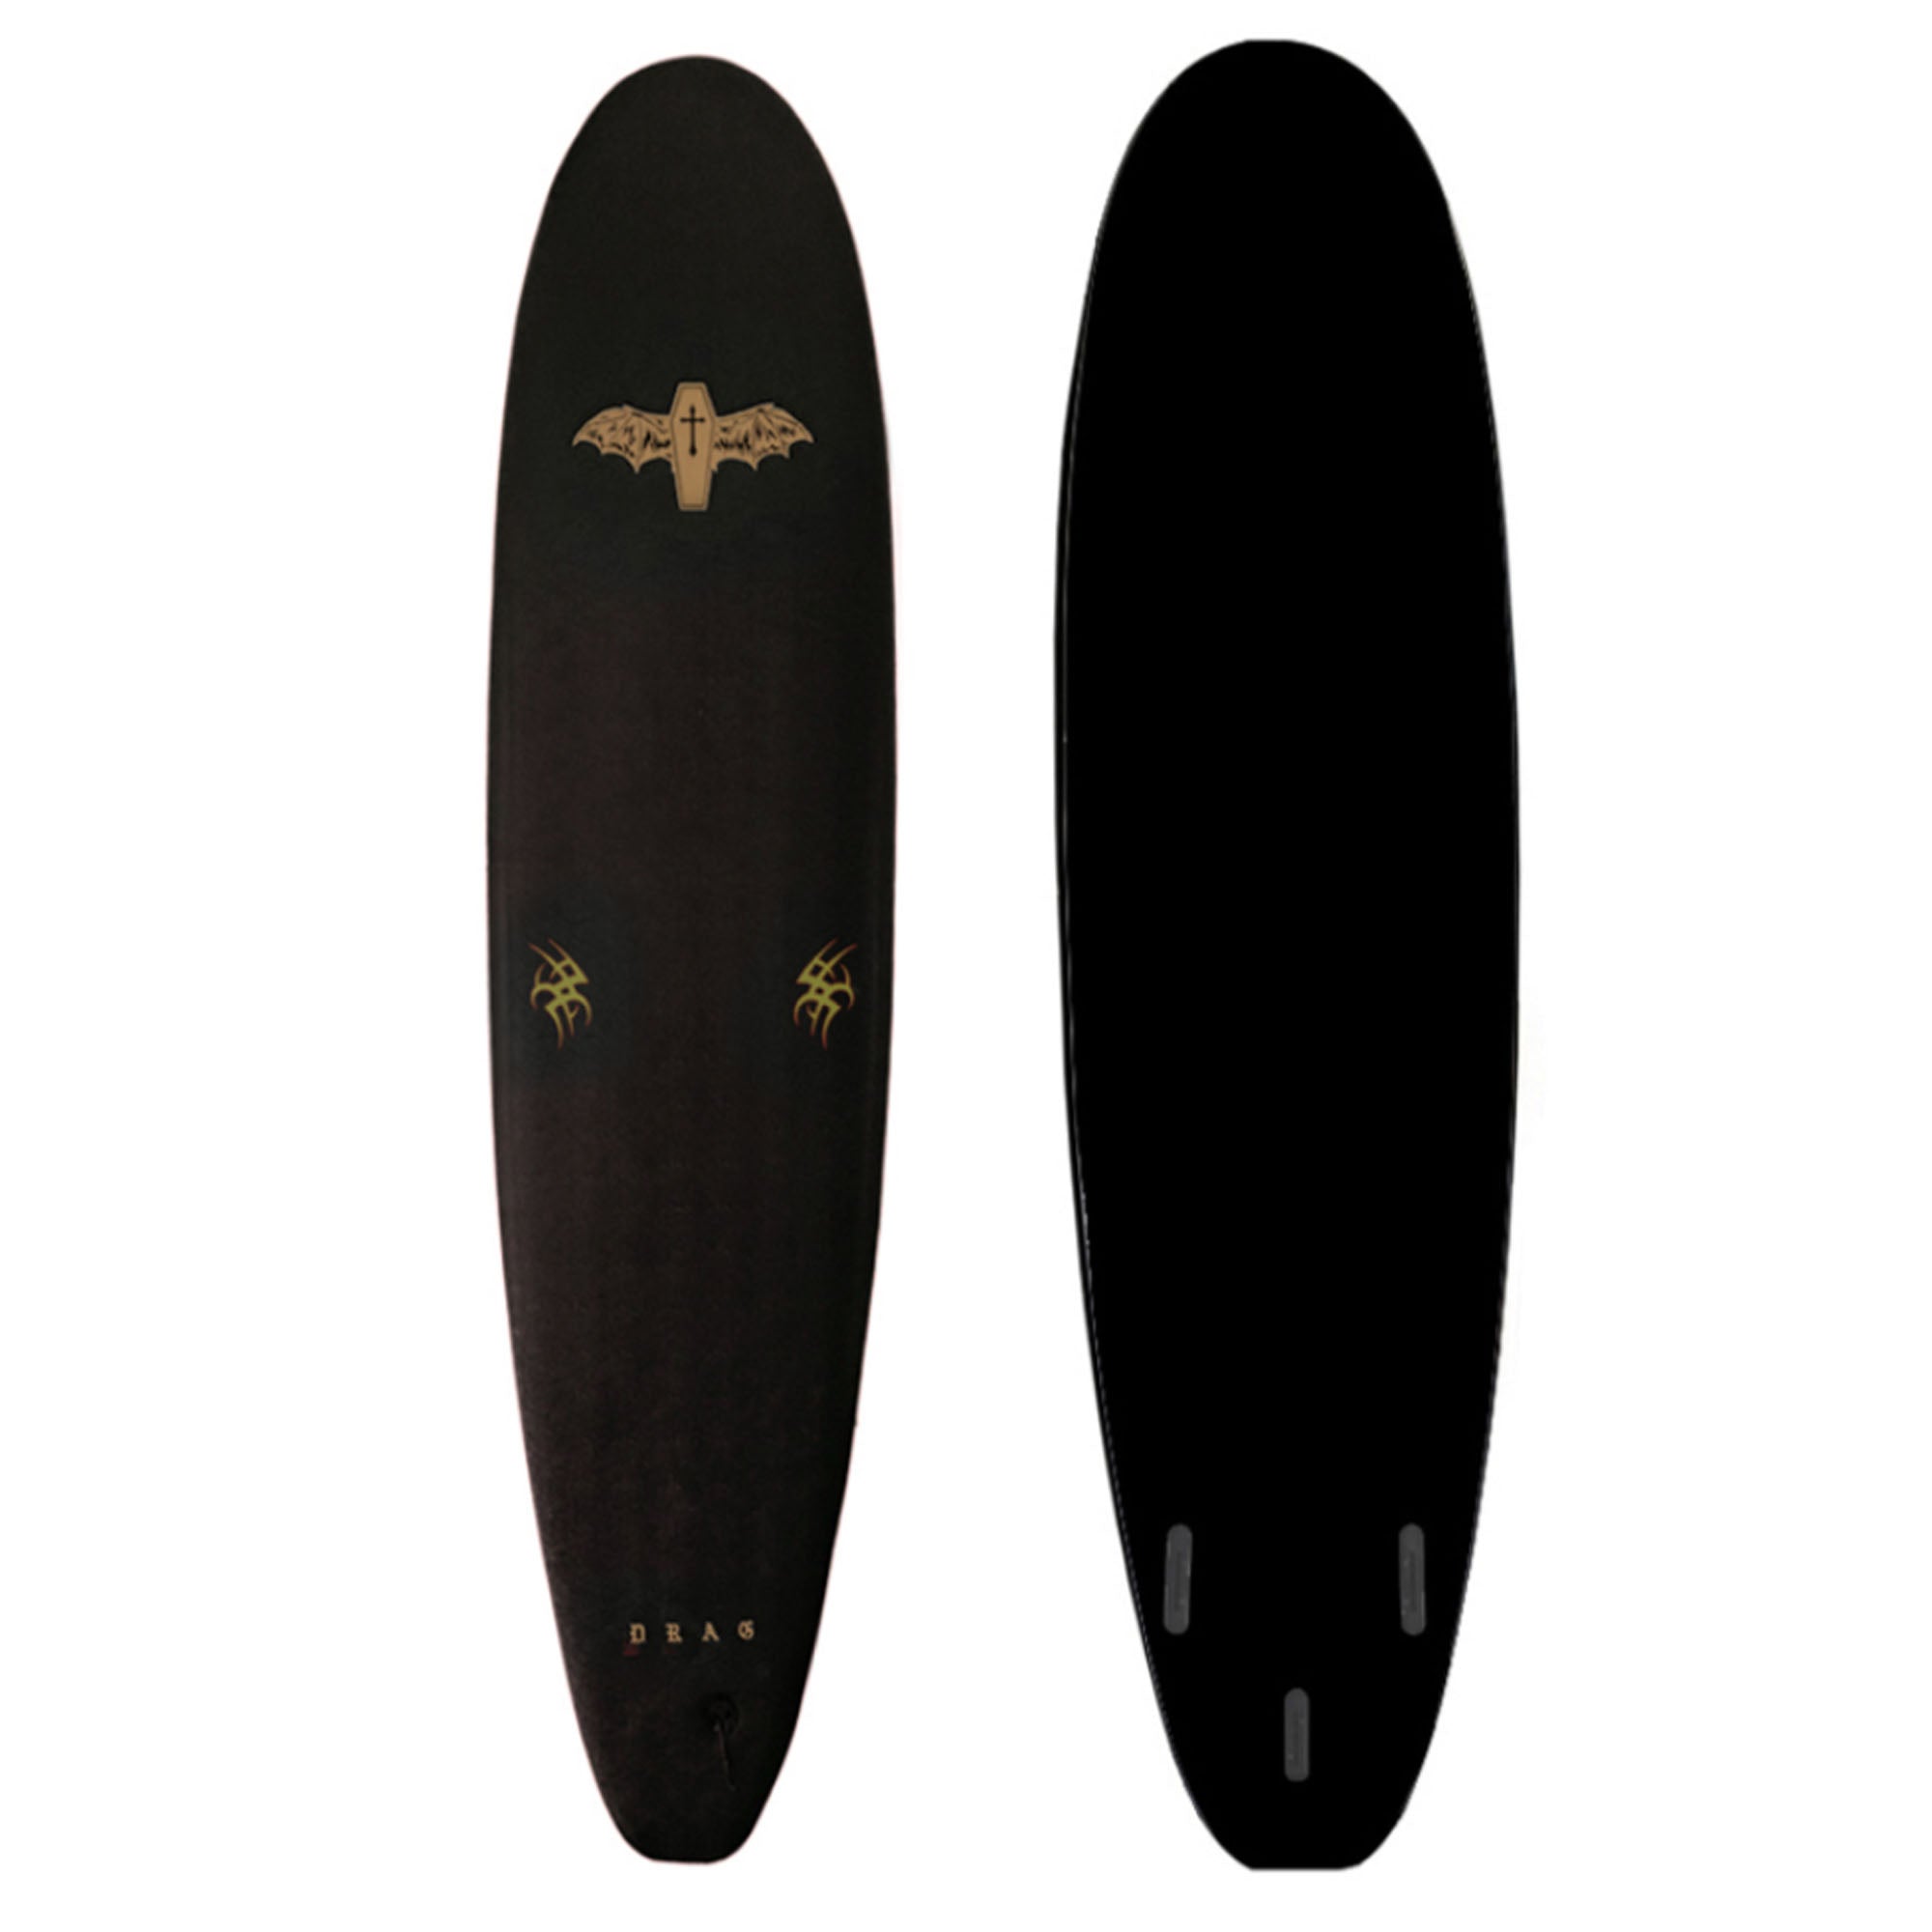 Drag Coffin 8'0 Thruster Soft Surfboard